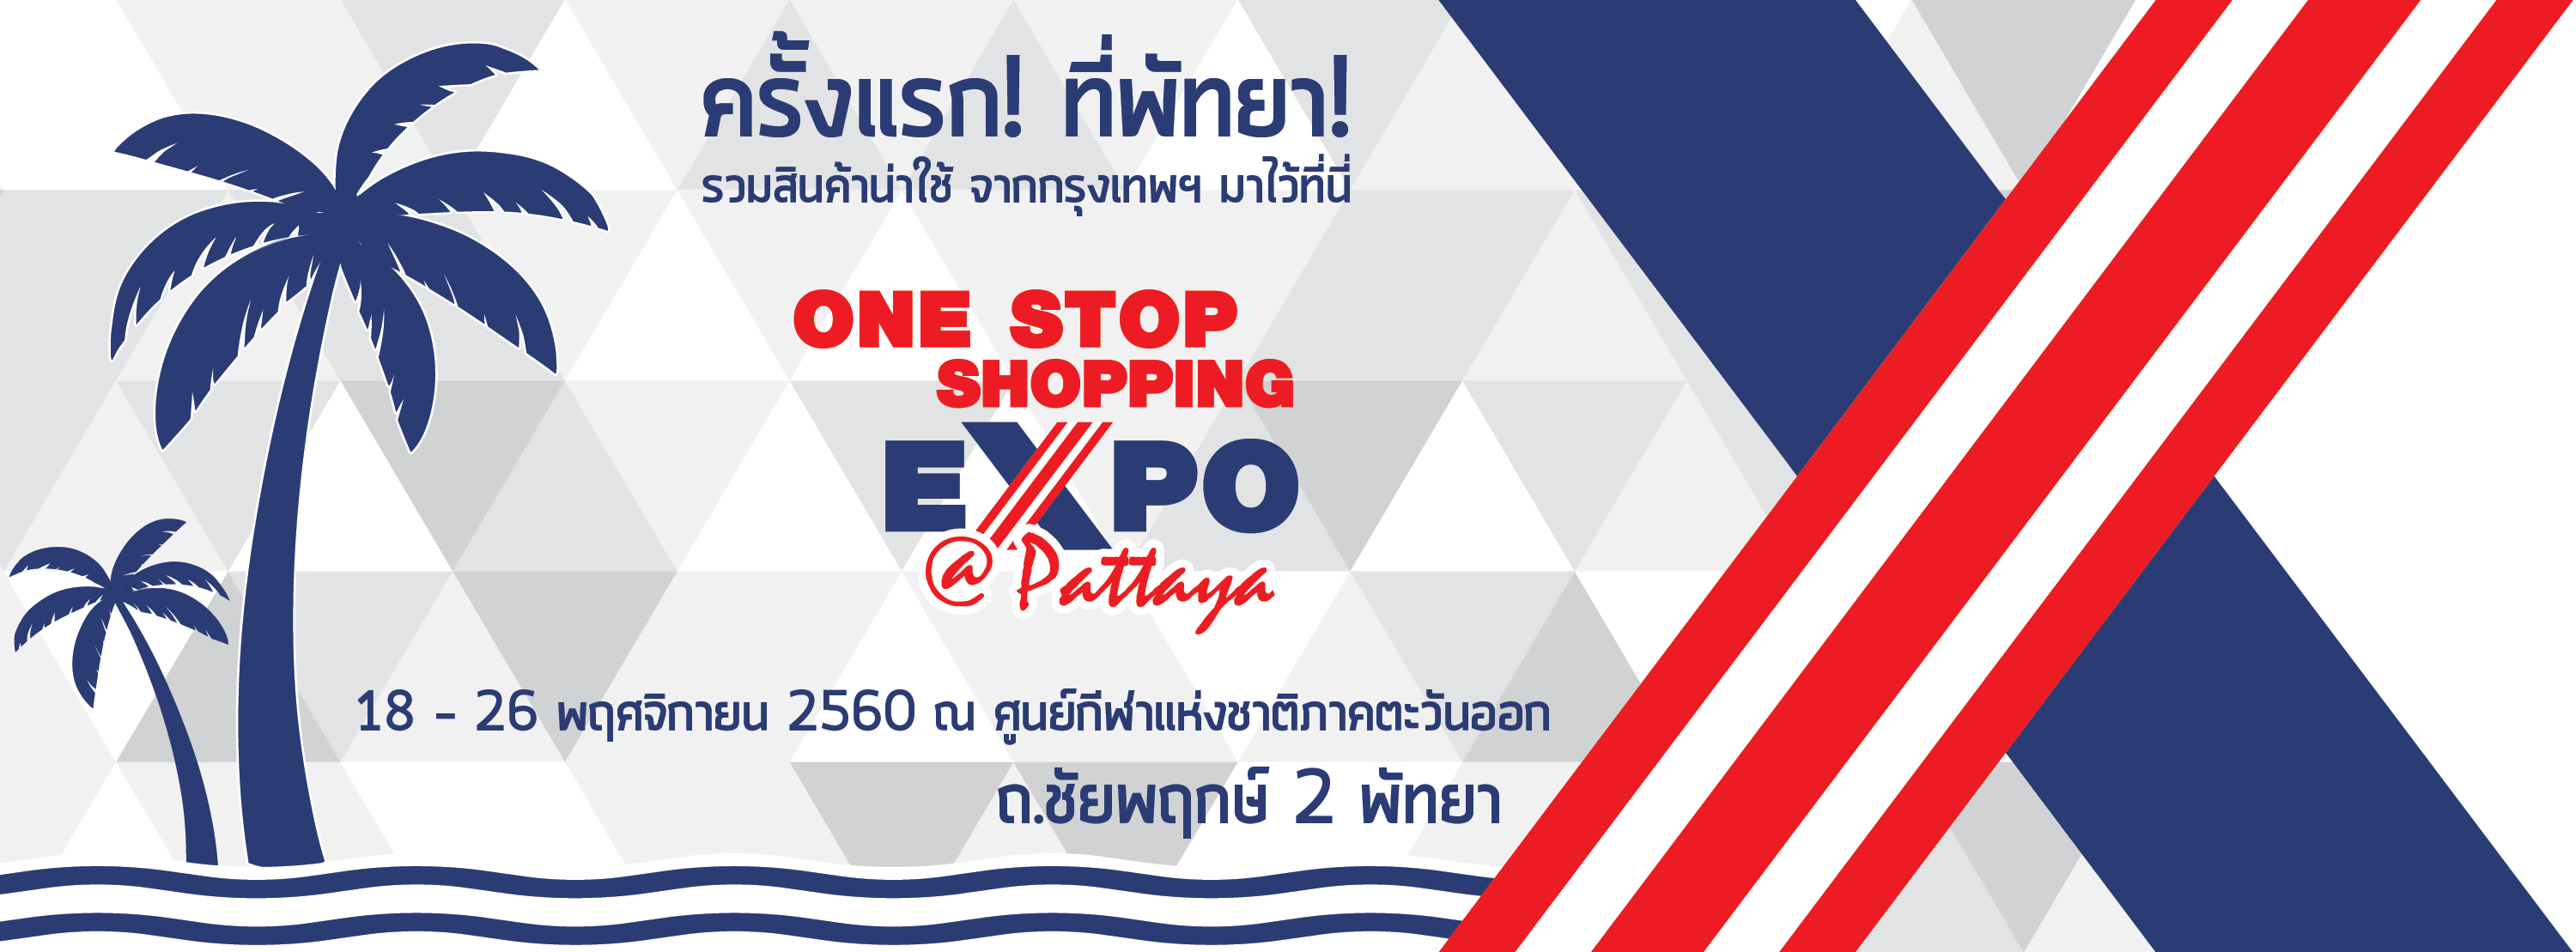 One Stop Shopping Expo @PATTAYA